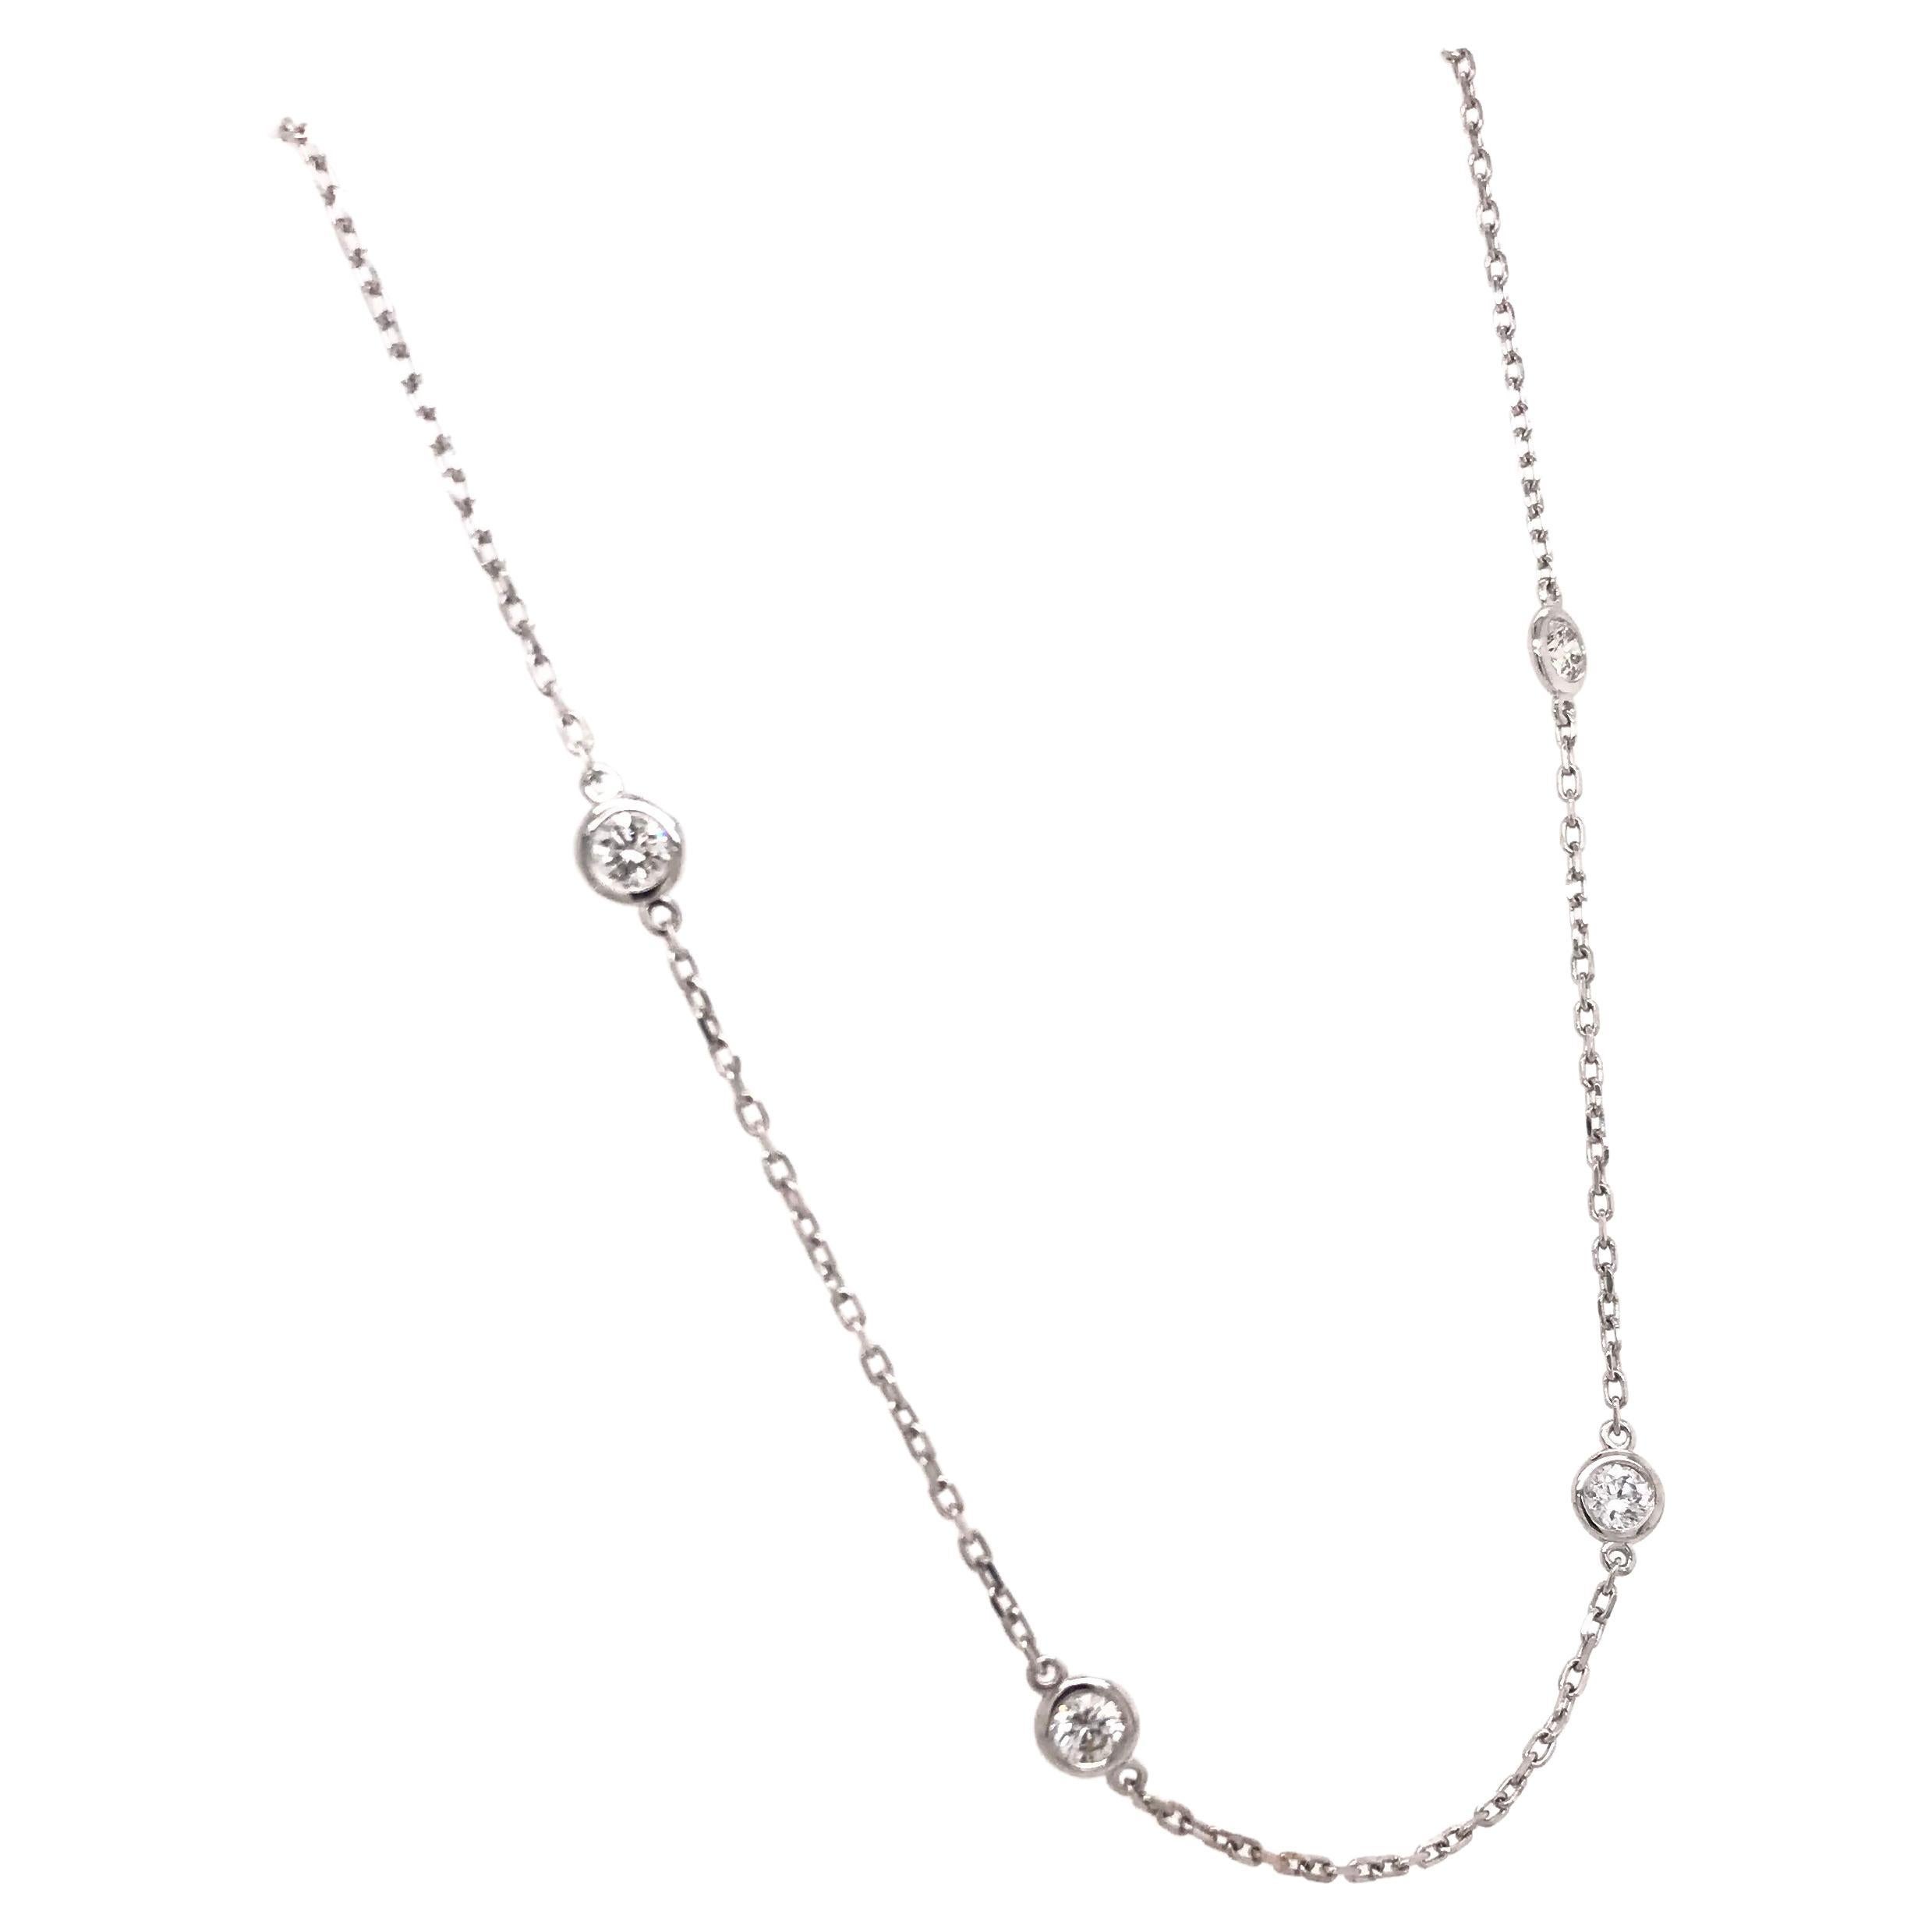 Contemporary 1.0 Carat DTW Diamond Necklace